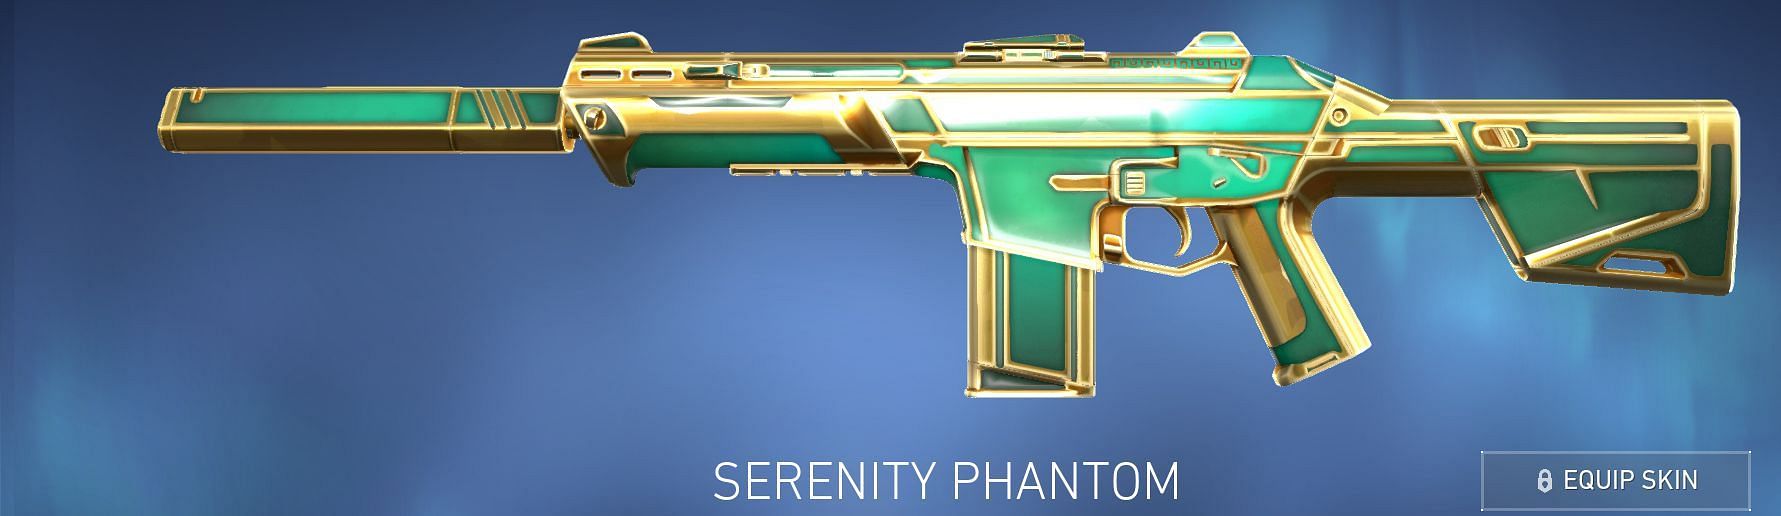 Serenity Phantom (Image via Riot Games)